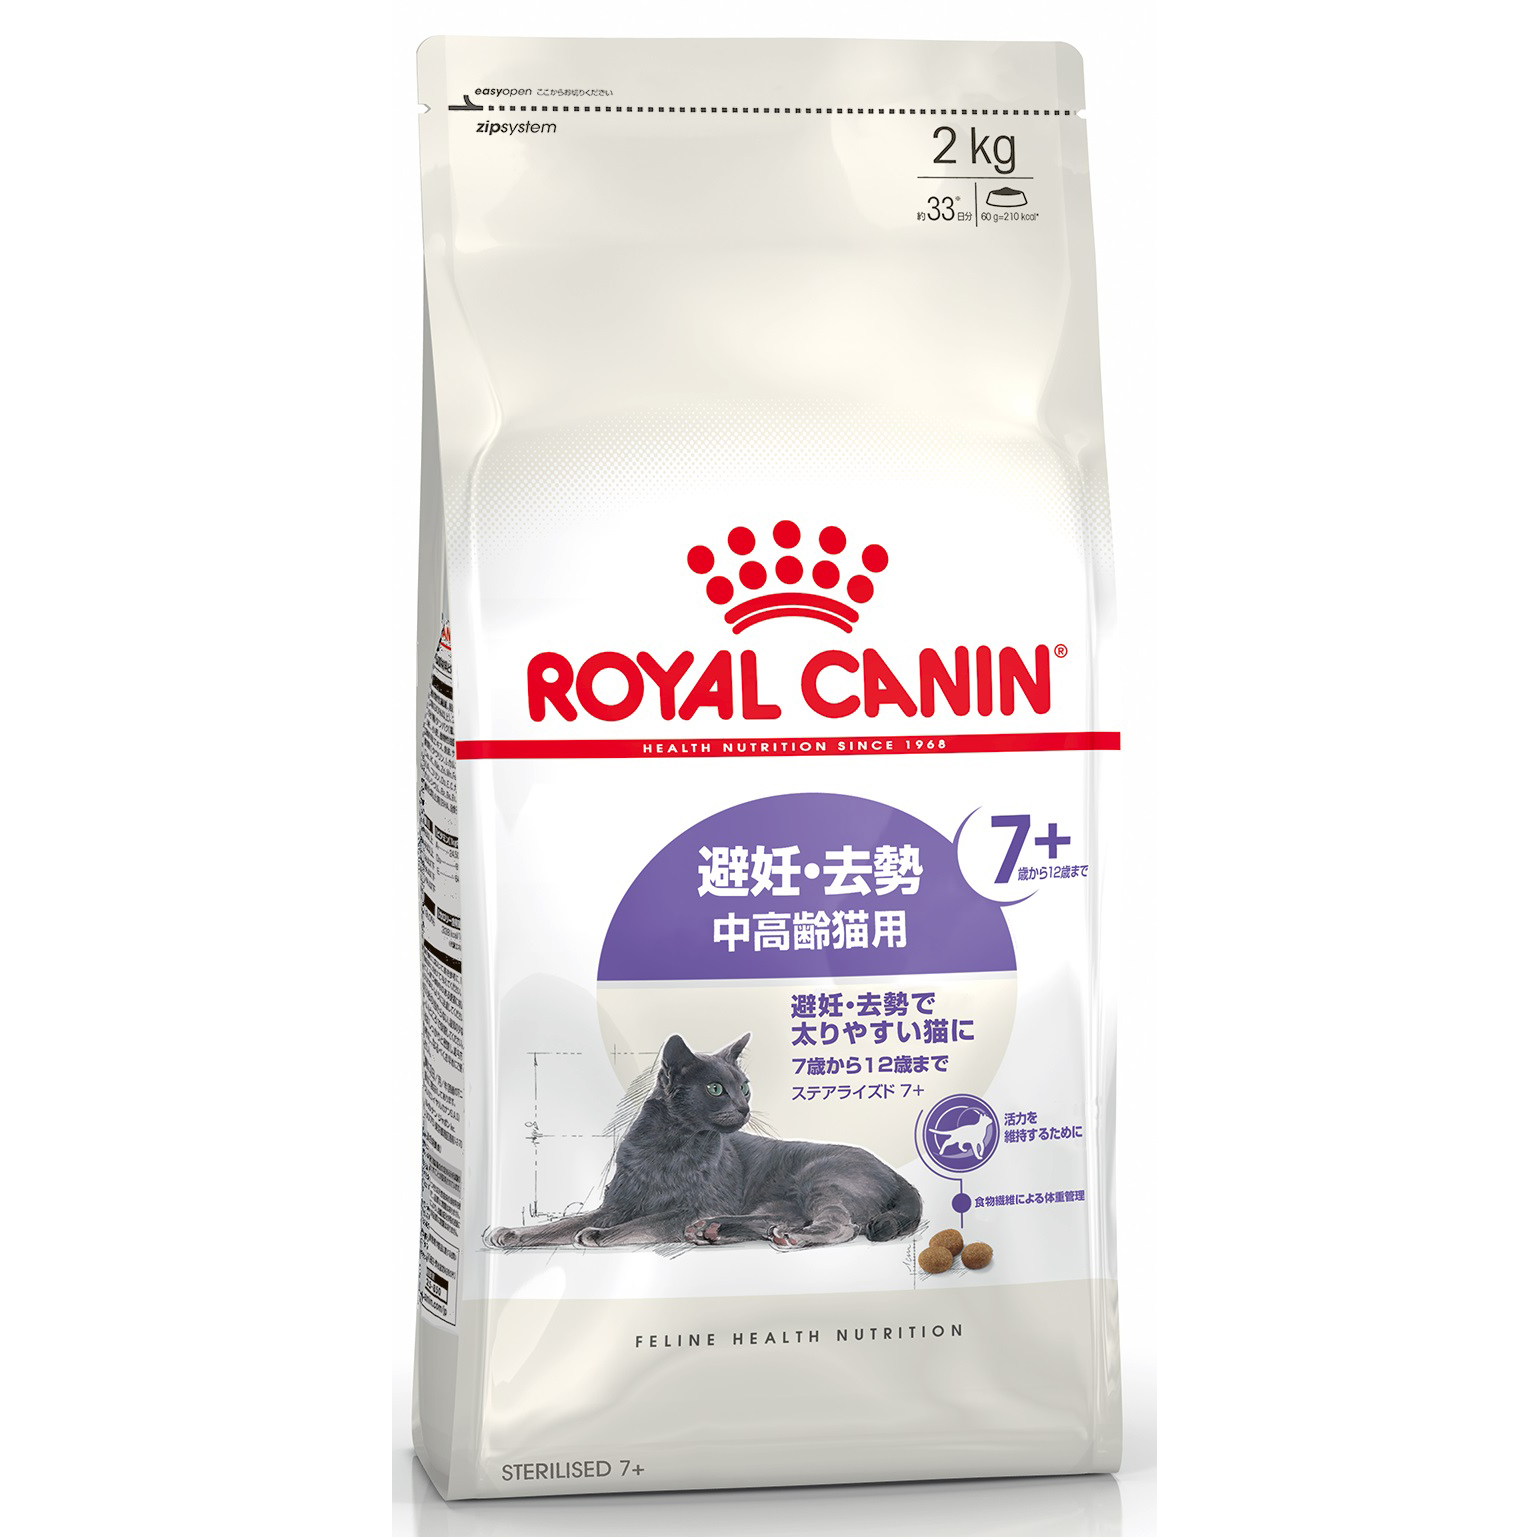 Royal Canin（ロイヤルカナン） | ペット用品・ペットフード卸売サイト